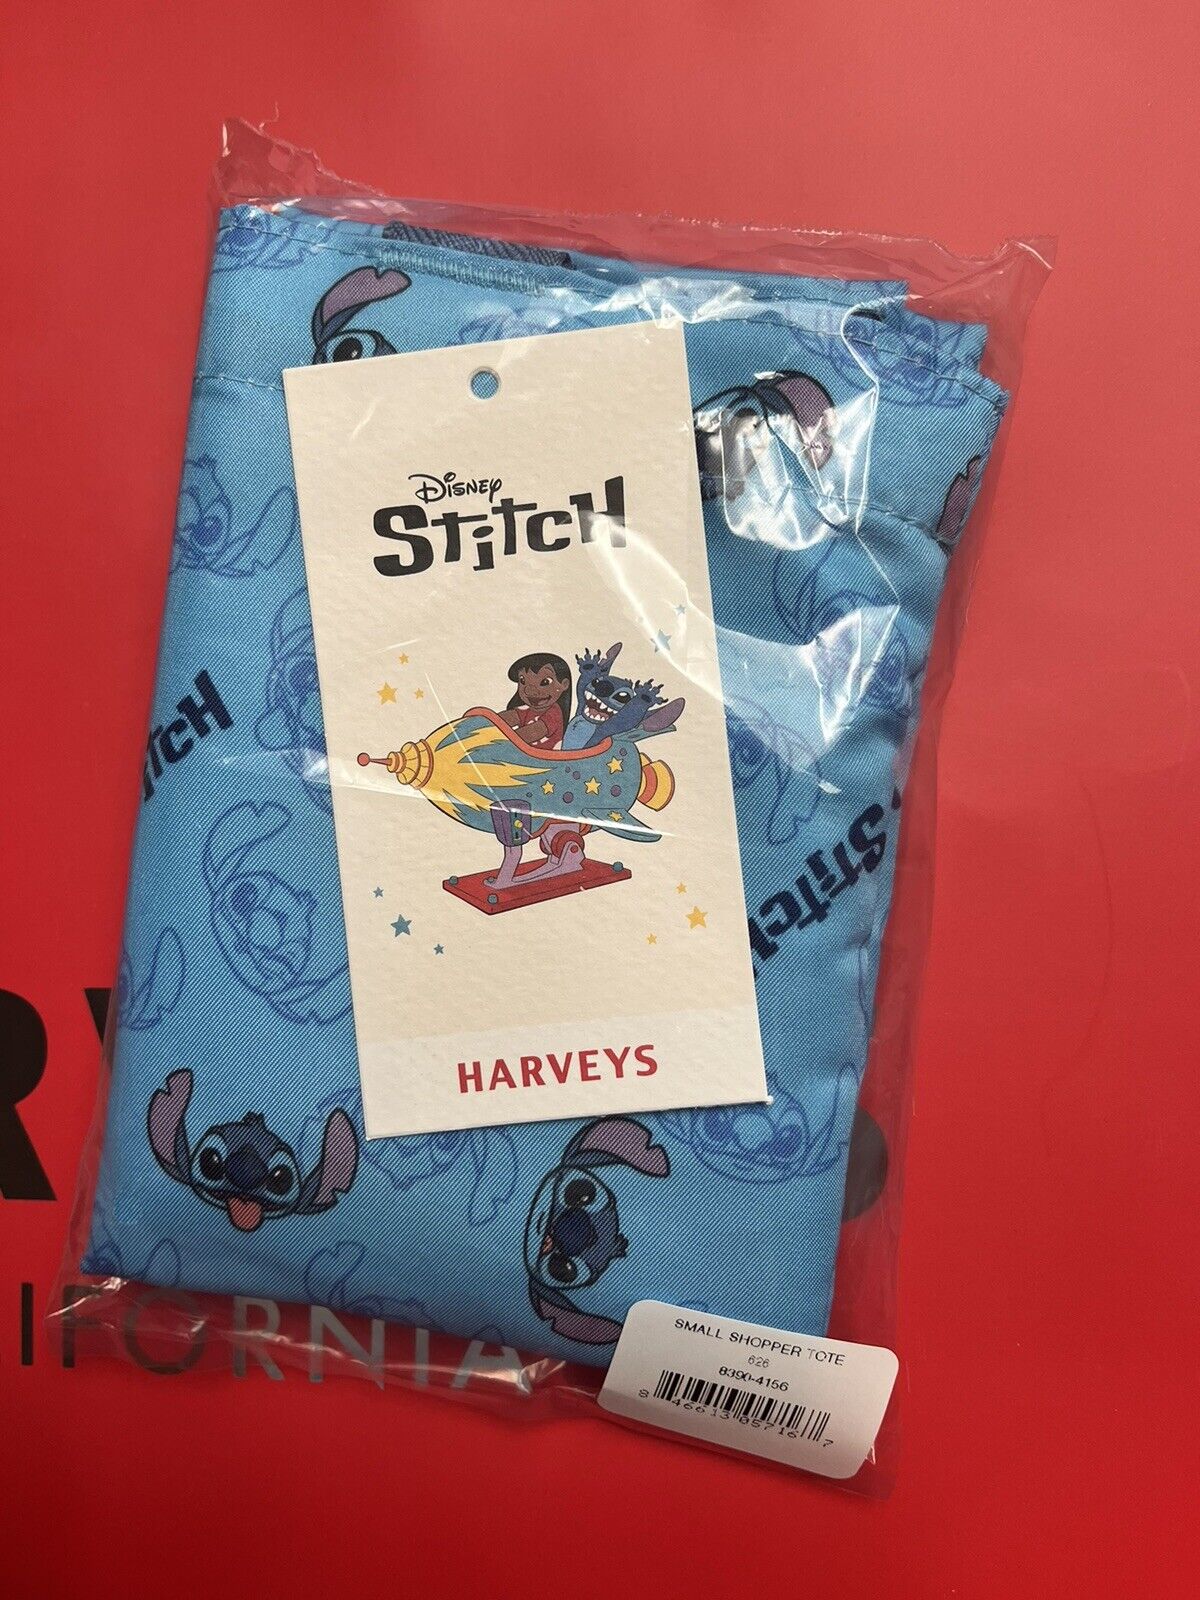 Harveys Seatbelt Disney Stitch Small Shopper Tote Bag IN HAND